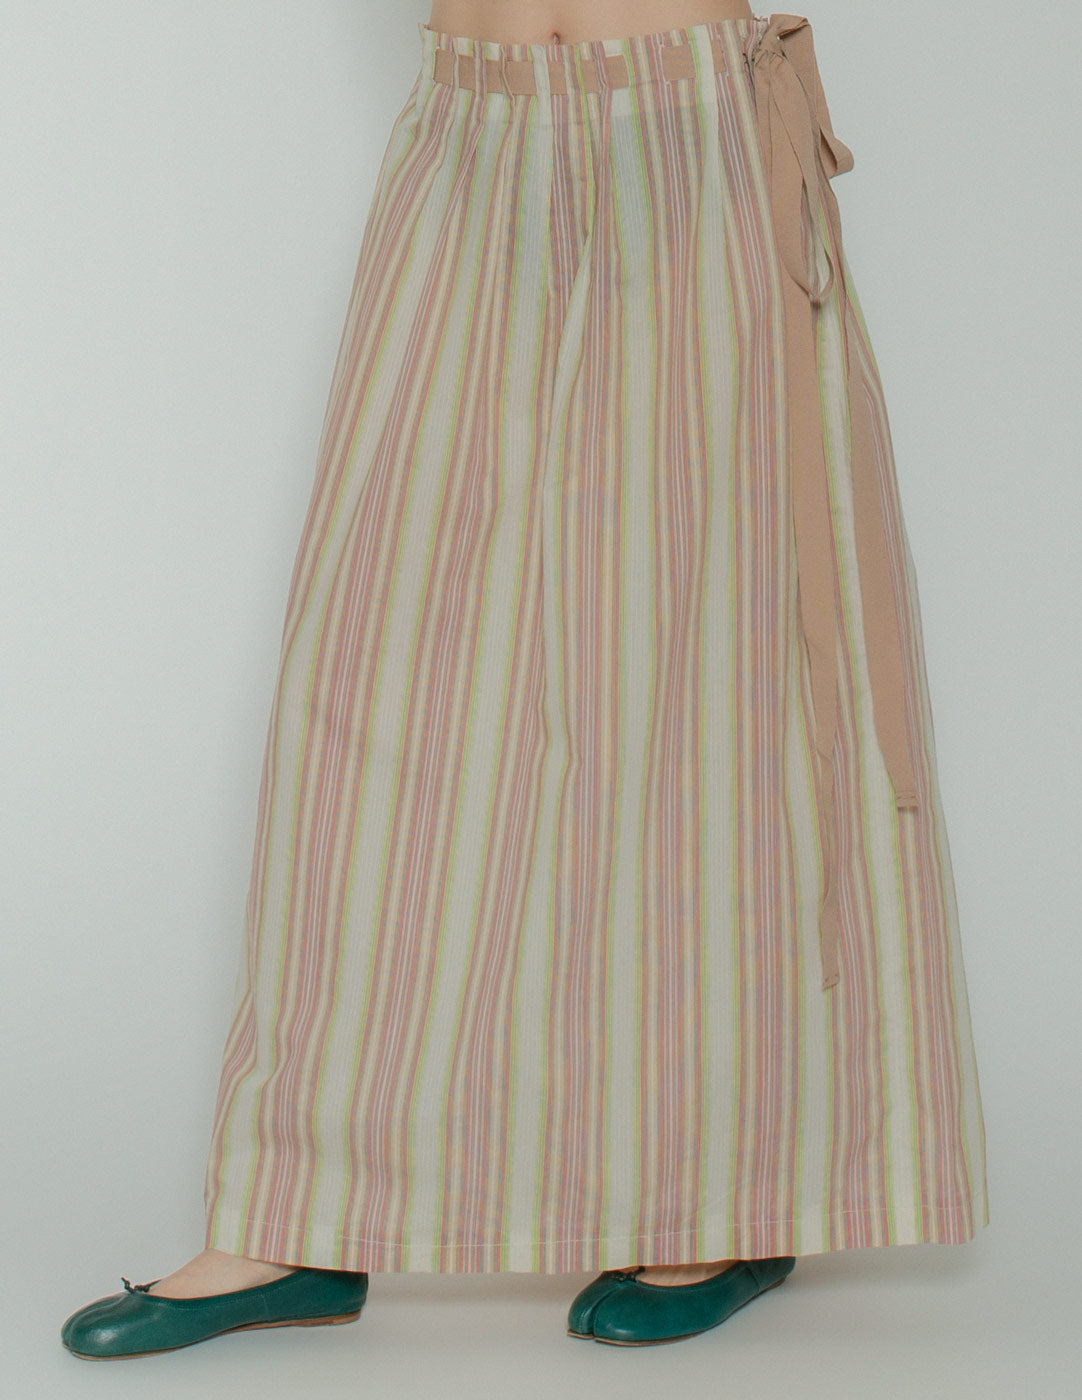 Romeo Gigli striped cotton skirt front detail